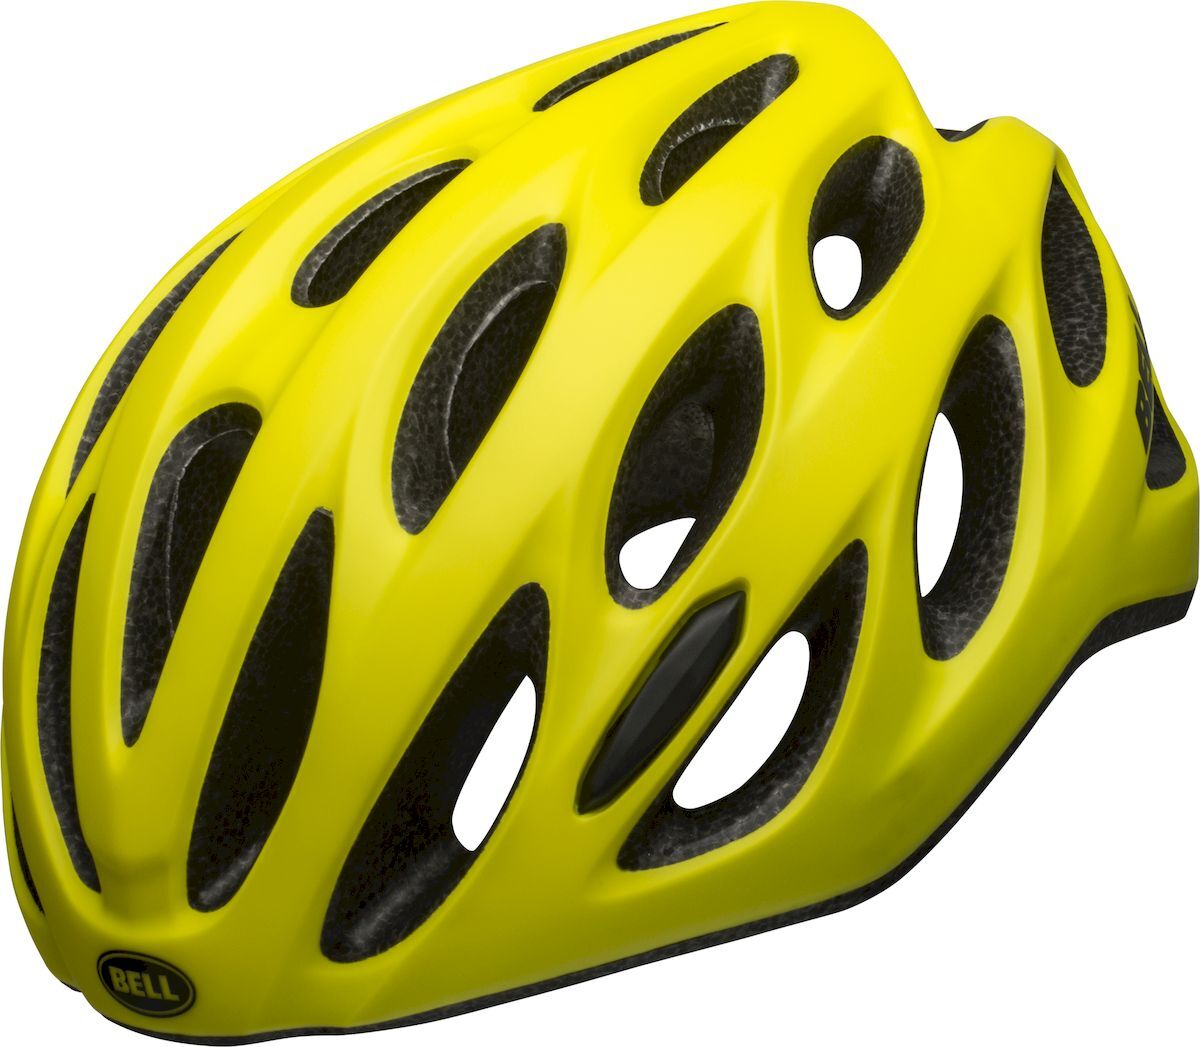 Bell Helmets Tracker R - Cykelhjelm